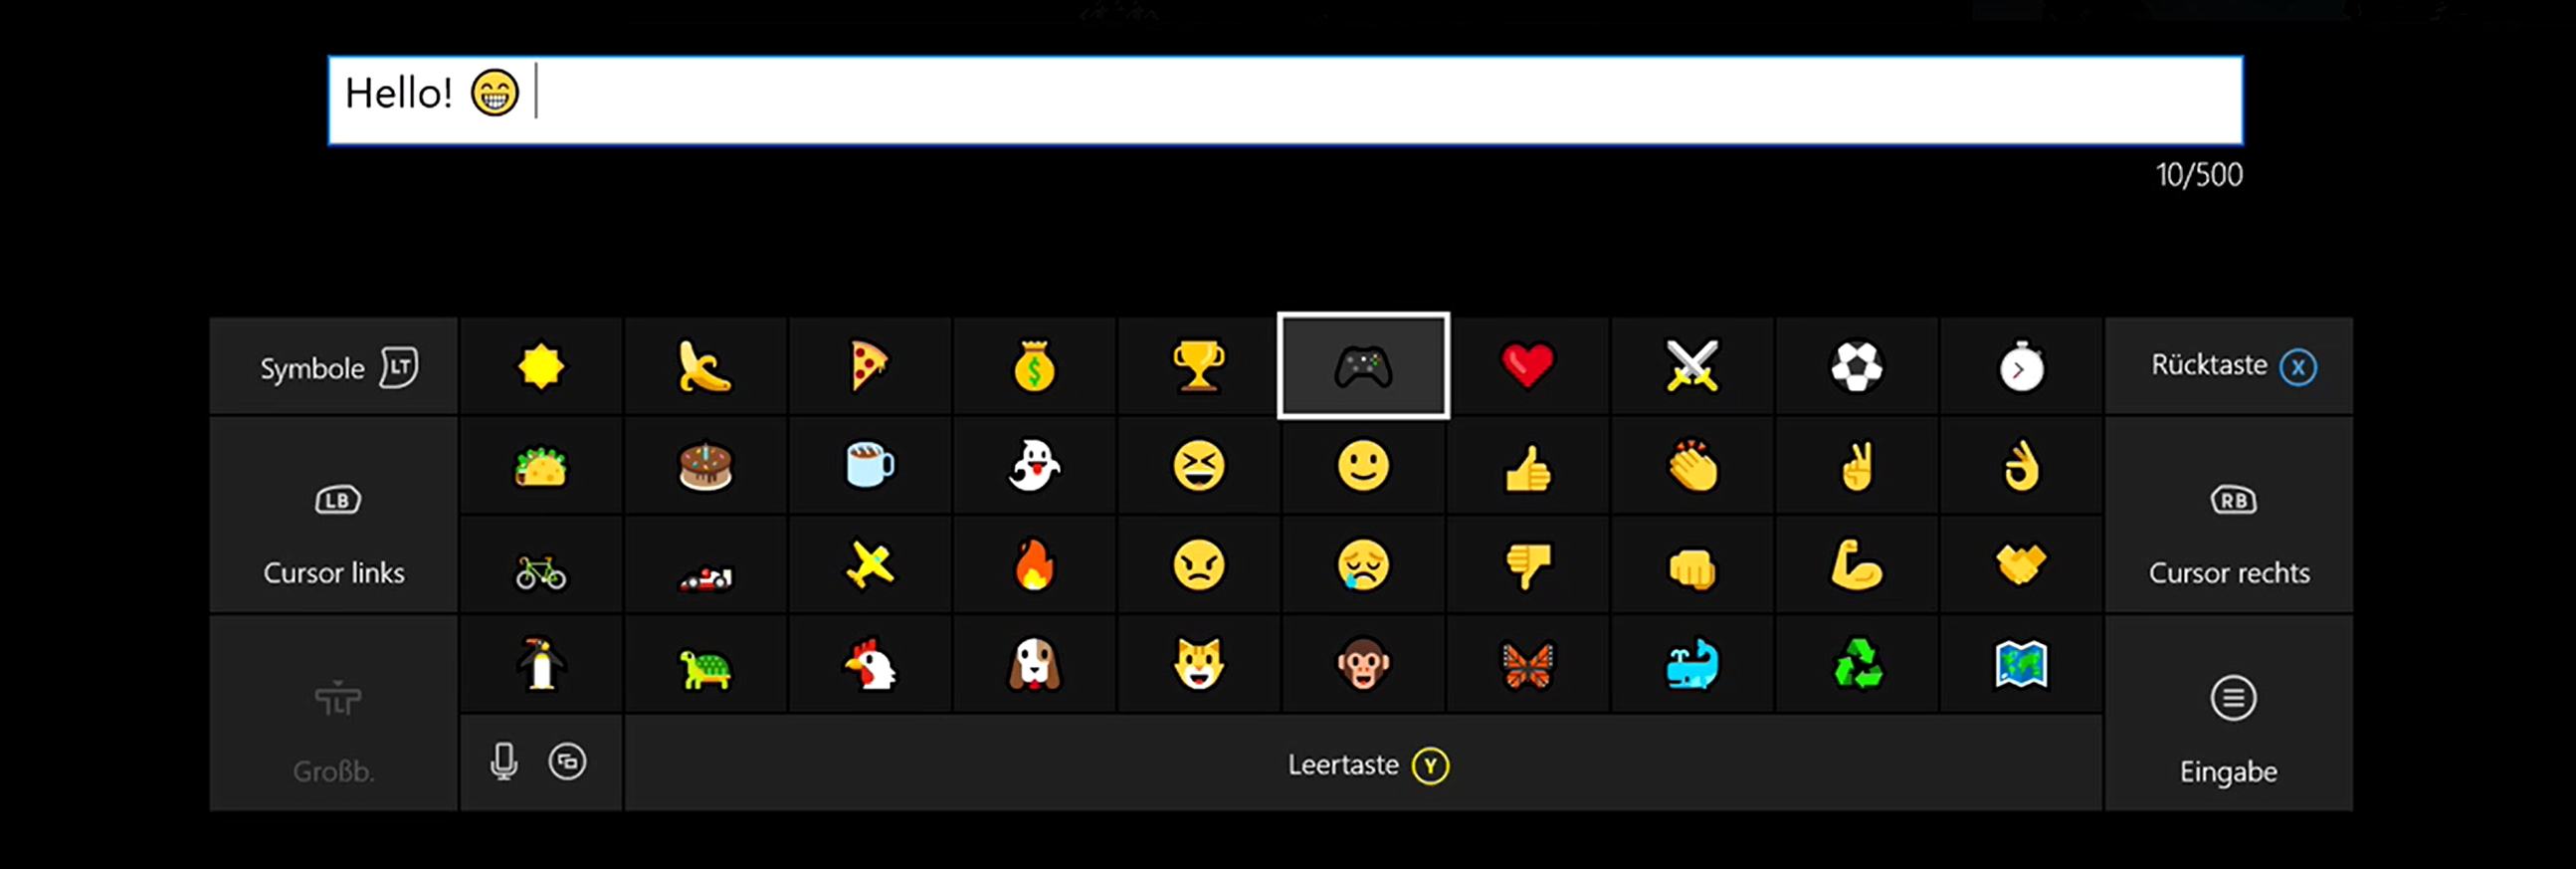 emojis-auf-xbox-one